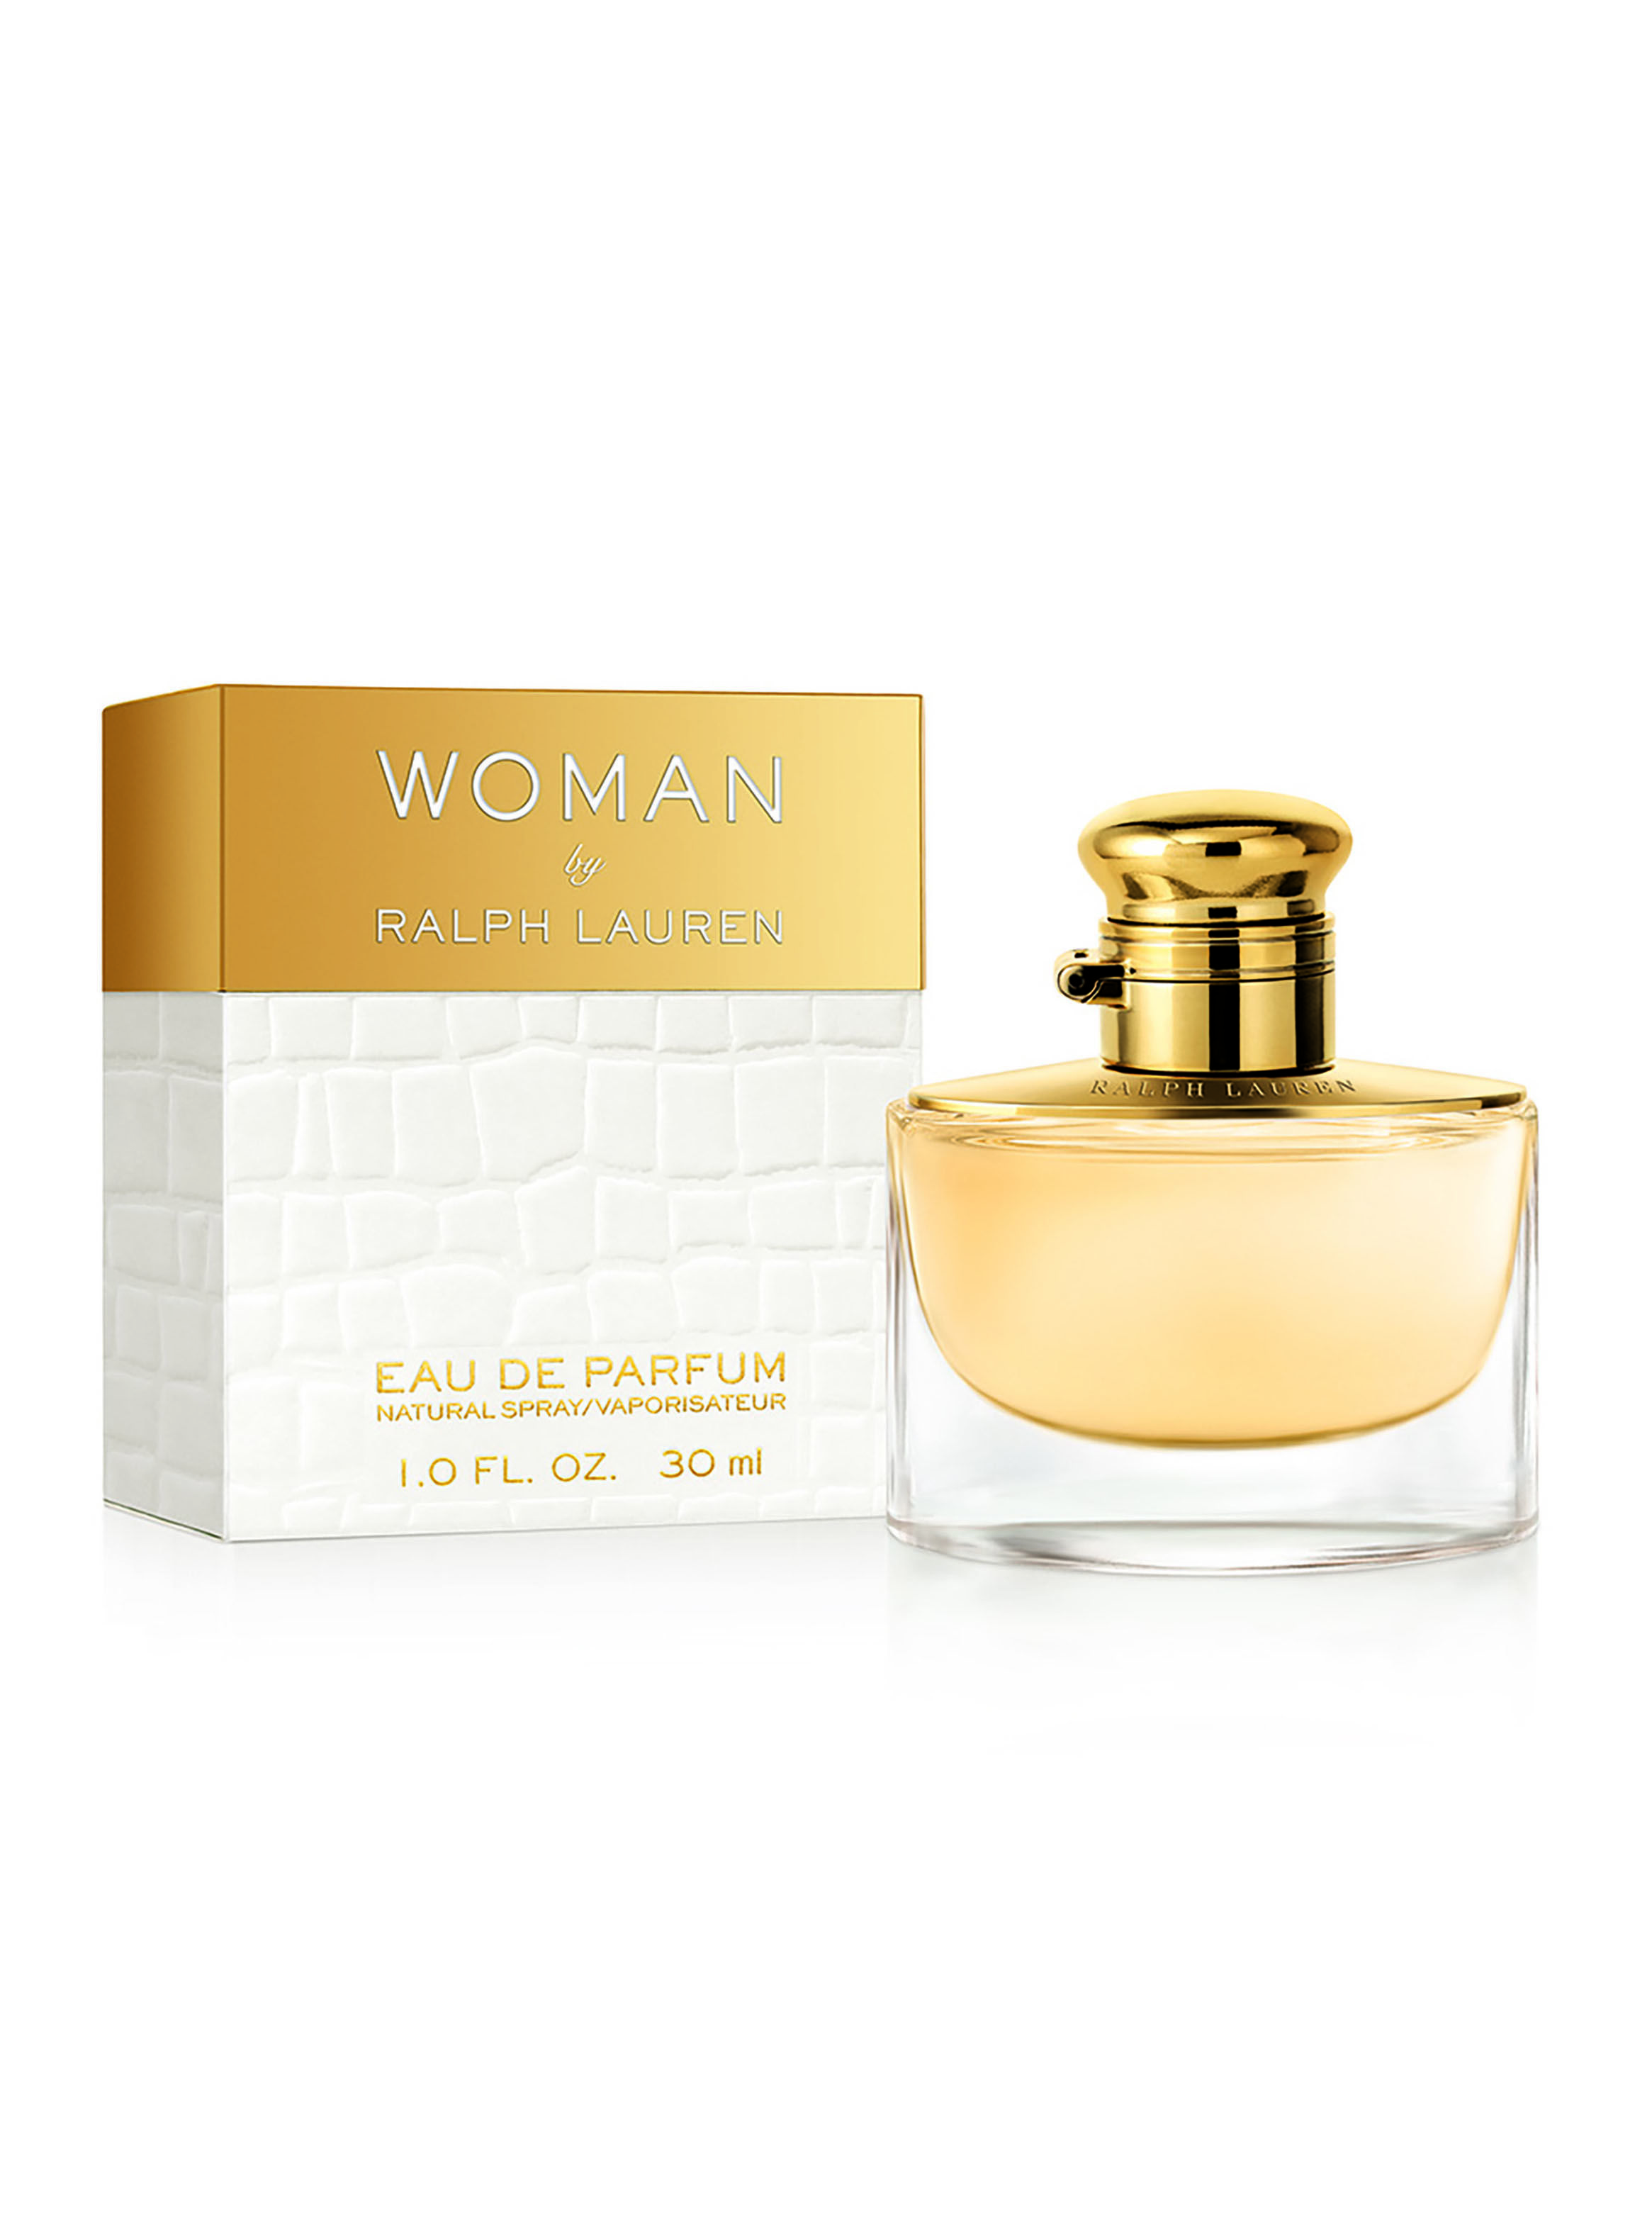 precio del perfume ralph lauren mujer